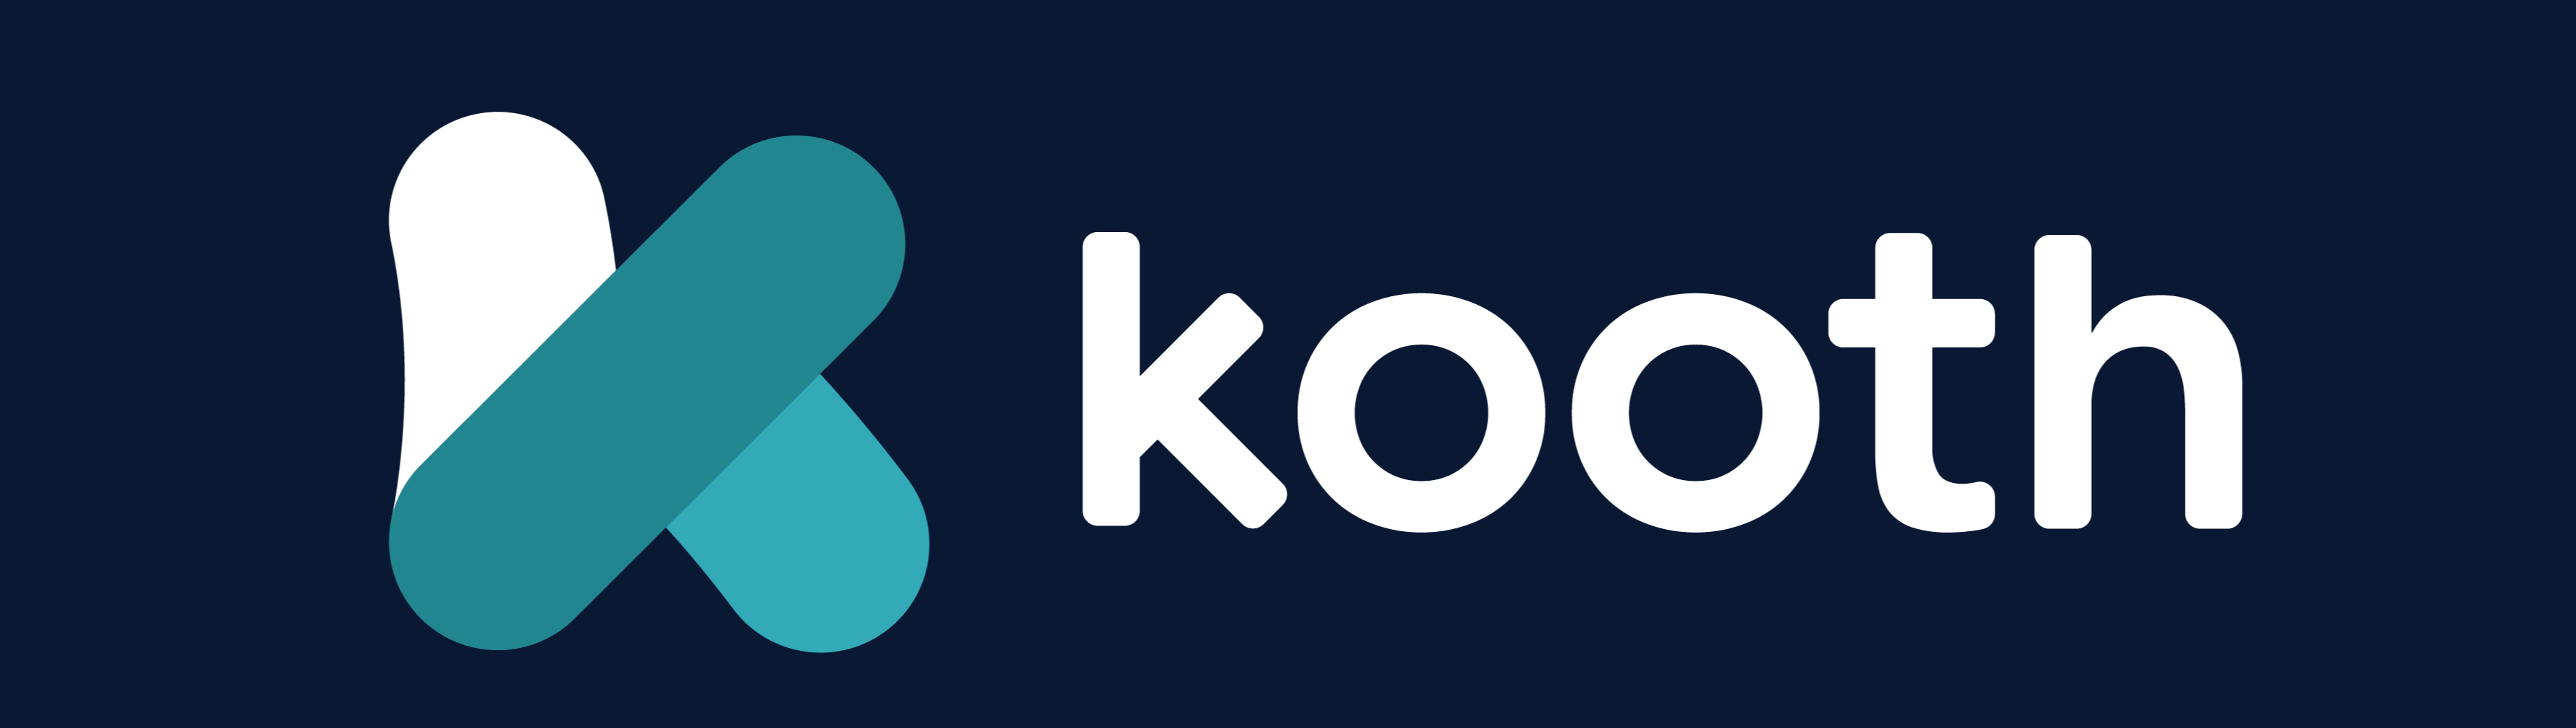 Kooth_Logo-family_Kooth Wordmark Horizontal on Dark FOR WEB - Edited